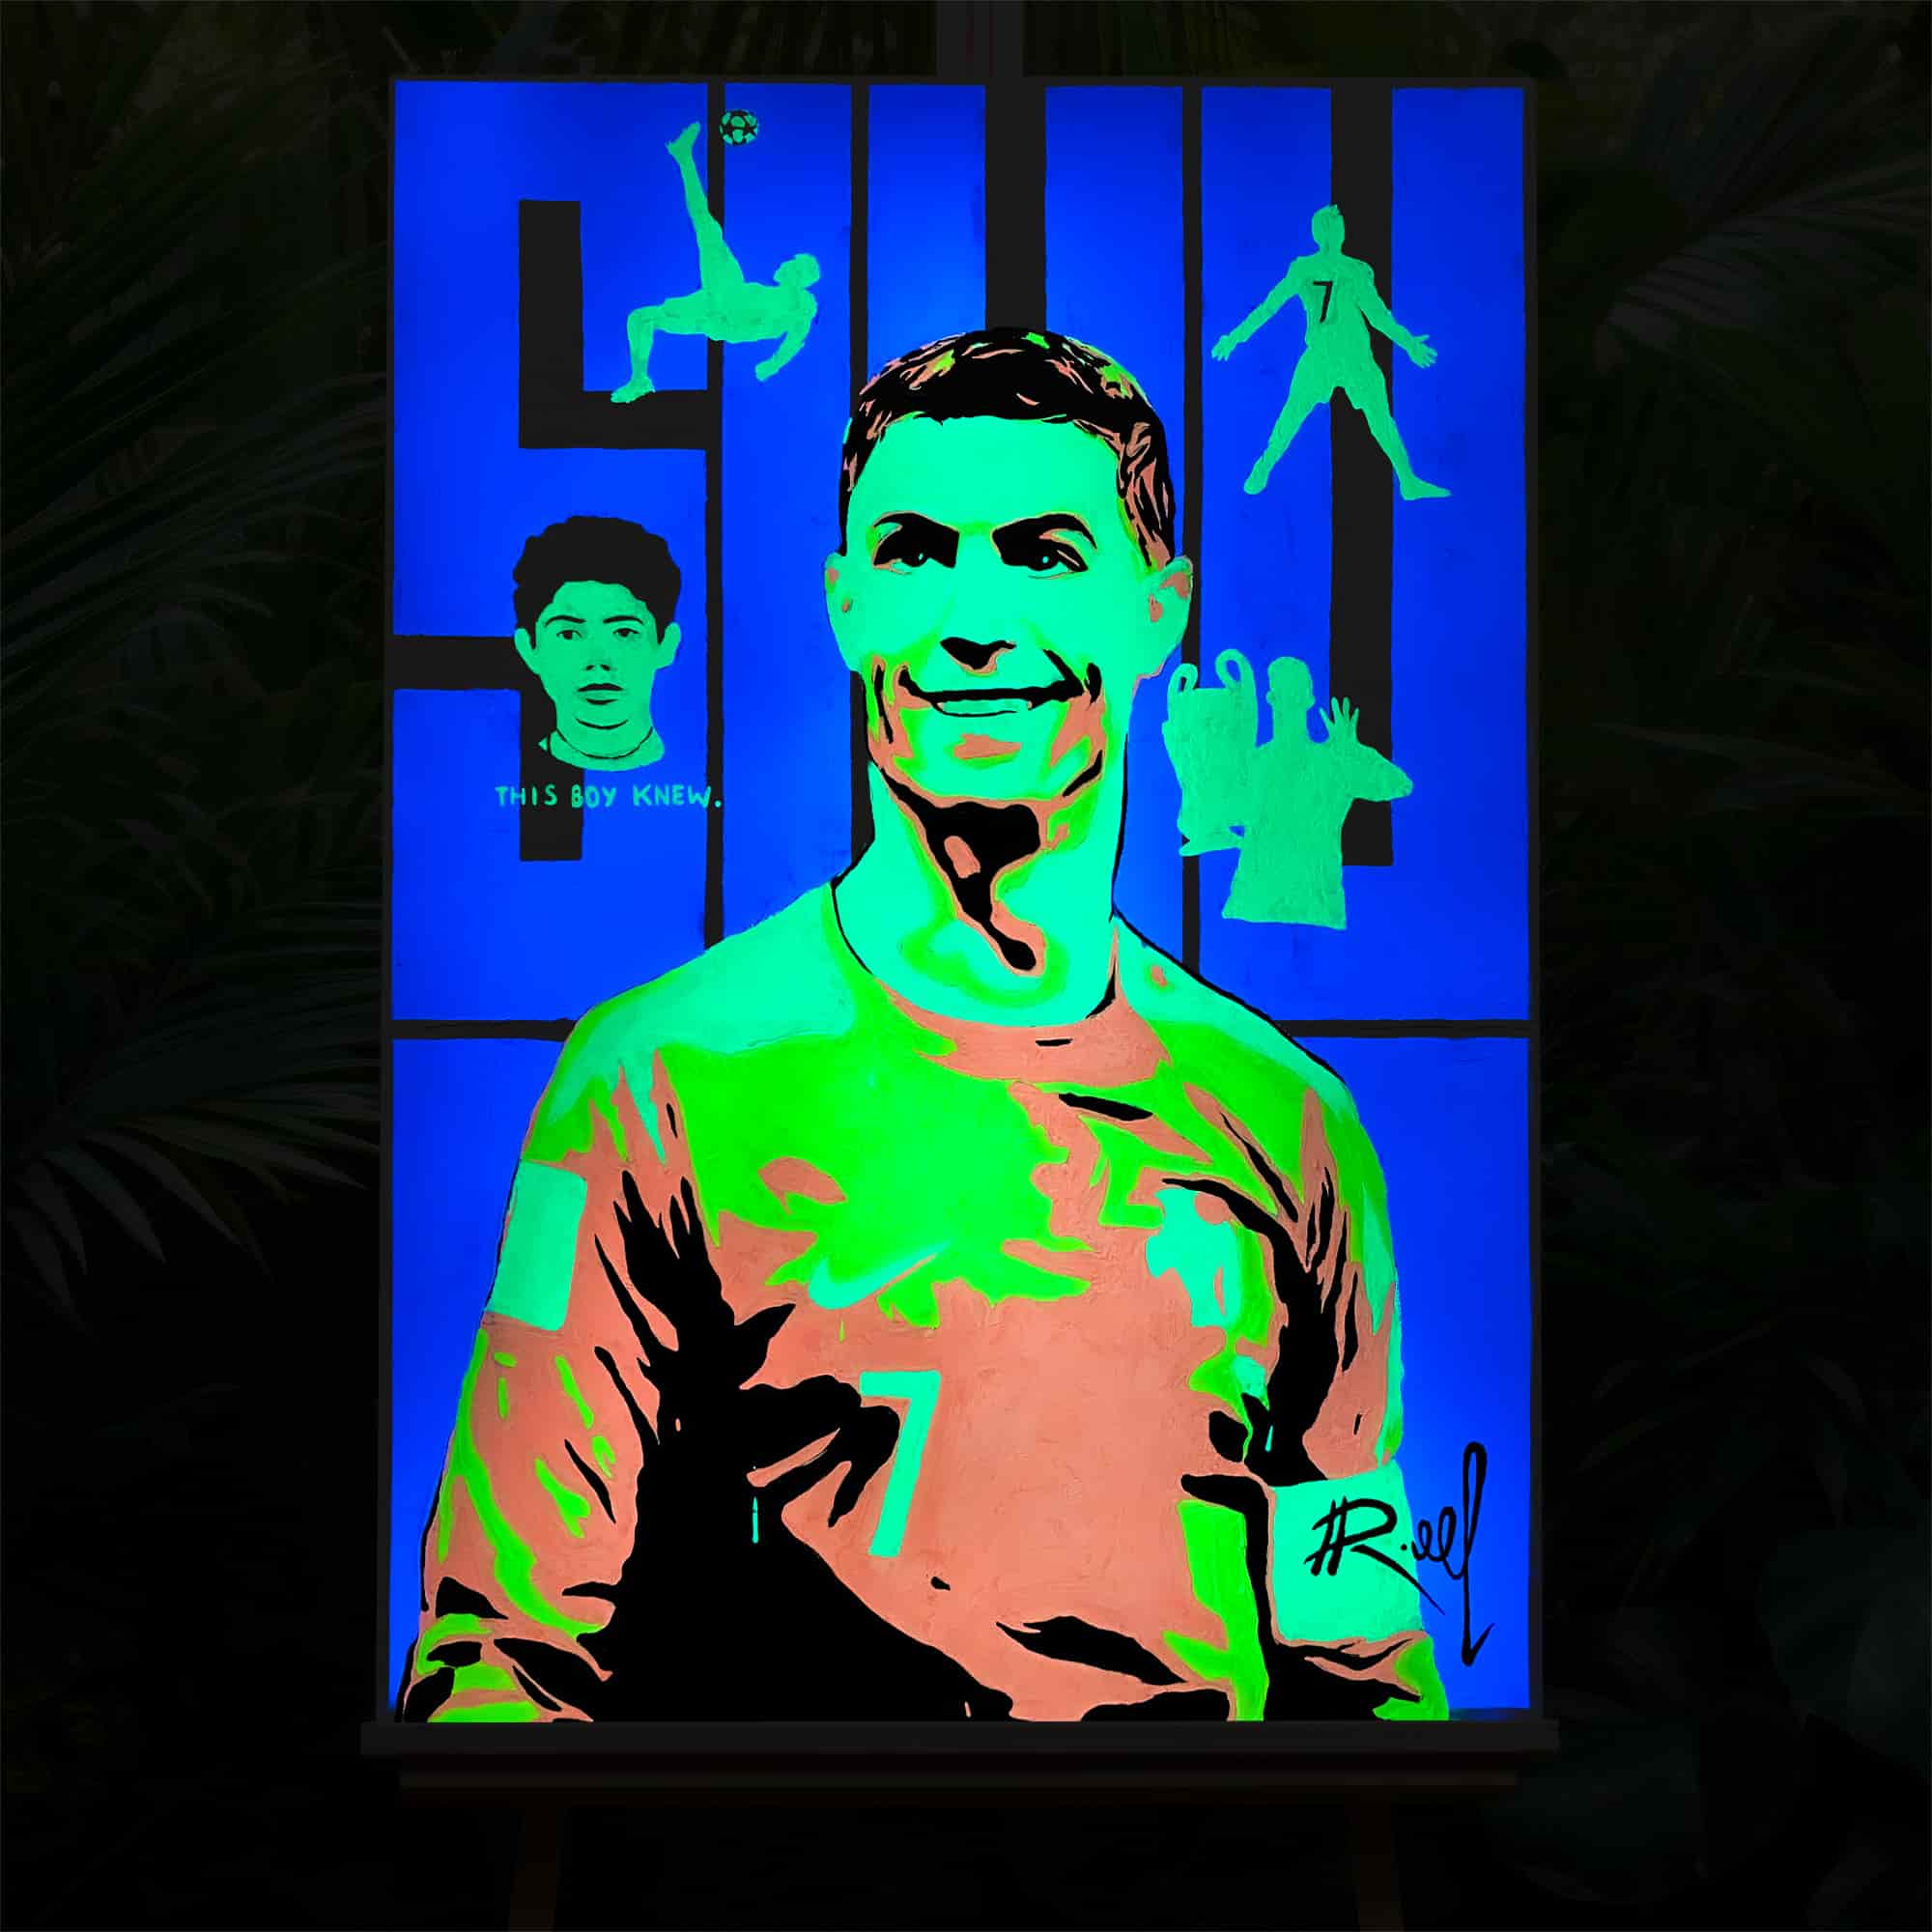 Dark background Glow in the dark Cristiano Ronaldo painting with green background